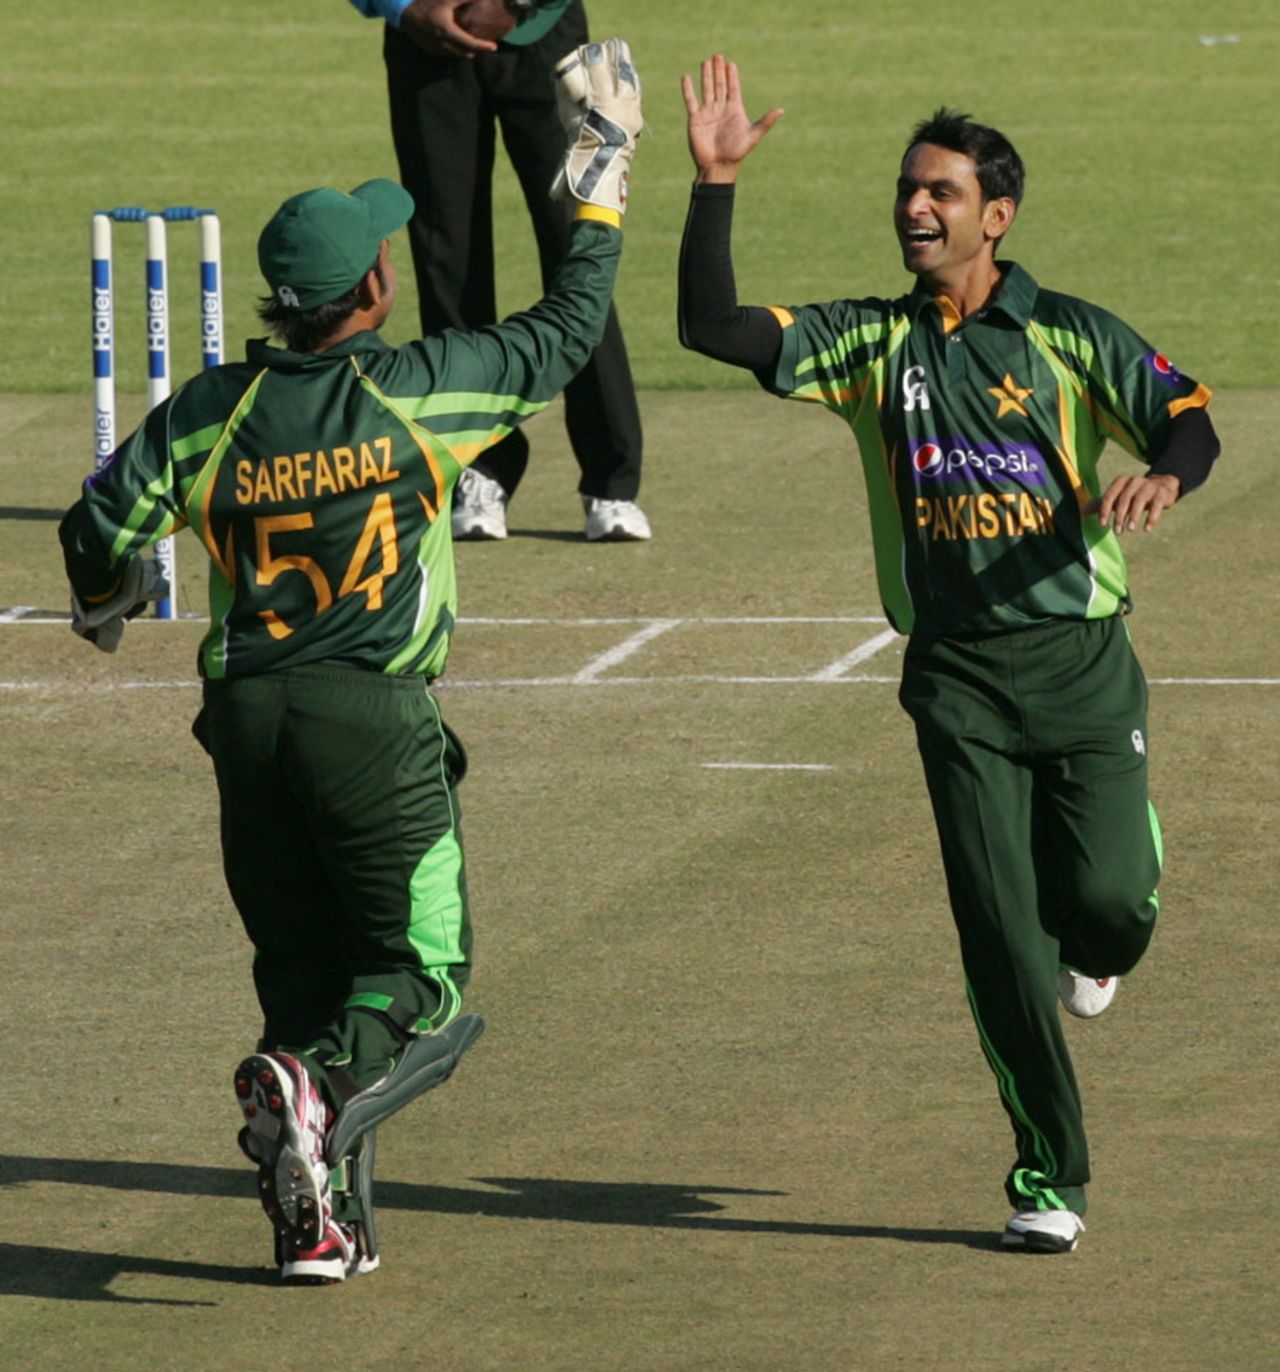 Mohammad Hafeez celebrates a wicket with Sarfraz Ahmed, Zimbabwe v Pakistan, 2nd T20I, Harare, August 24, 2013
